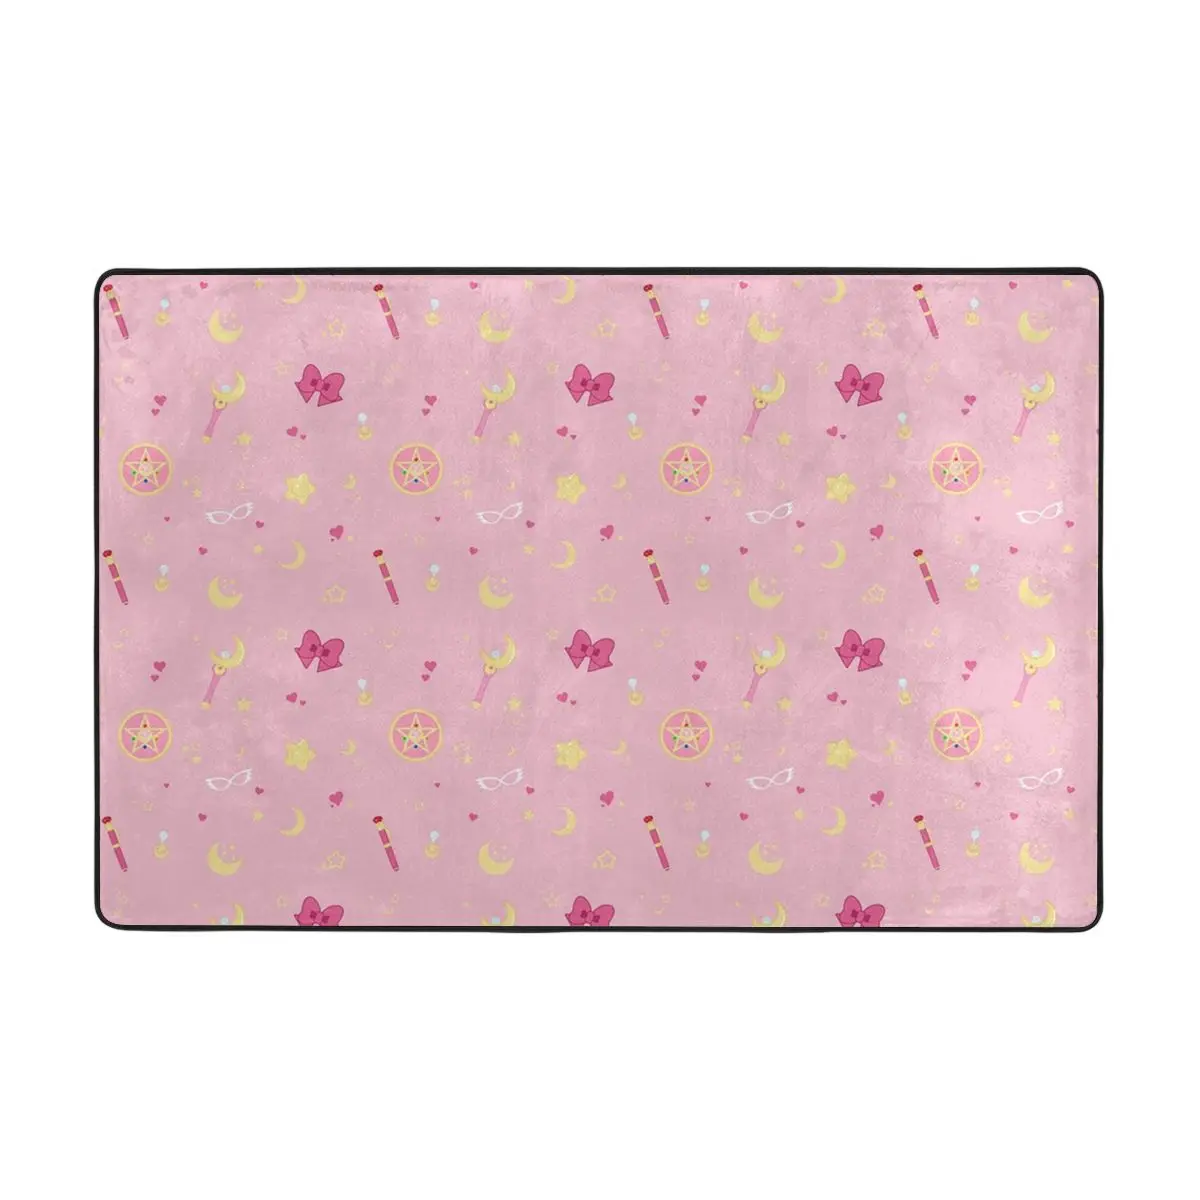 

Sailor Moon Doormat Carpet Mat Rug Polyester Non-Slip Floor Decor Bath Bathroom Kitchen Balcony 60x90